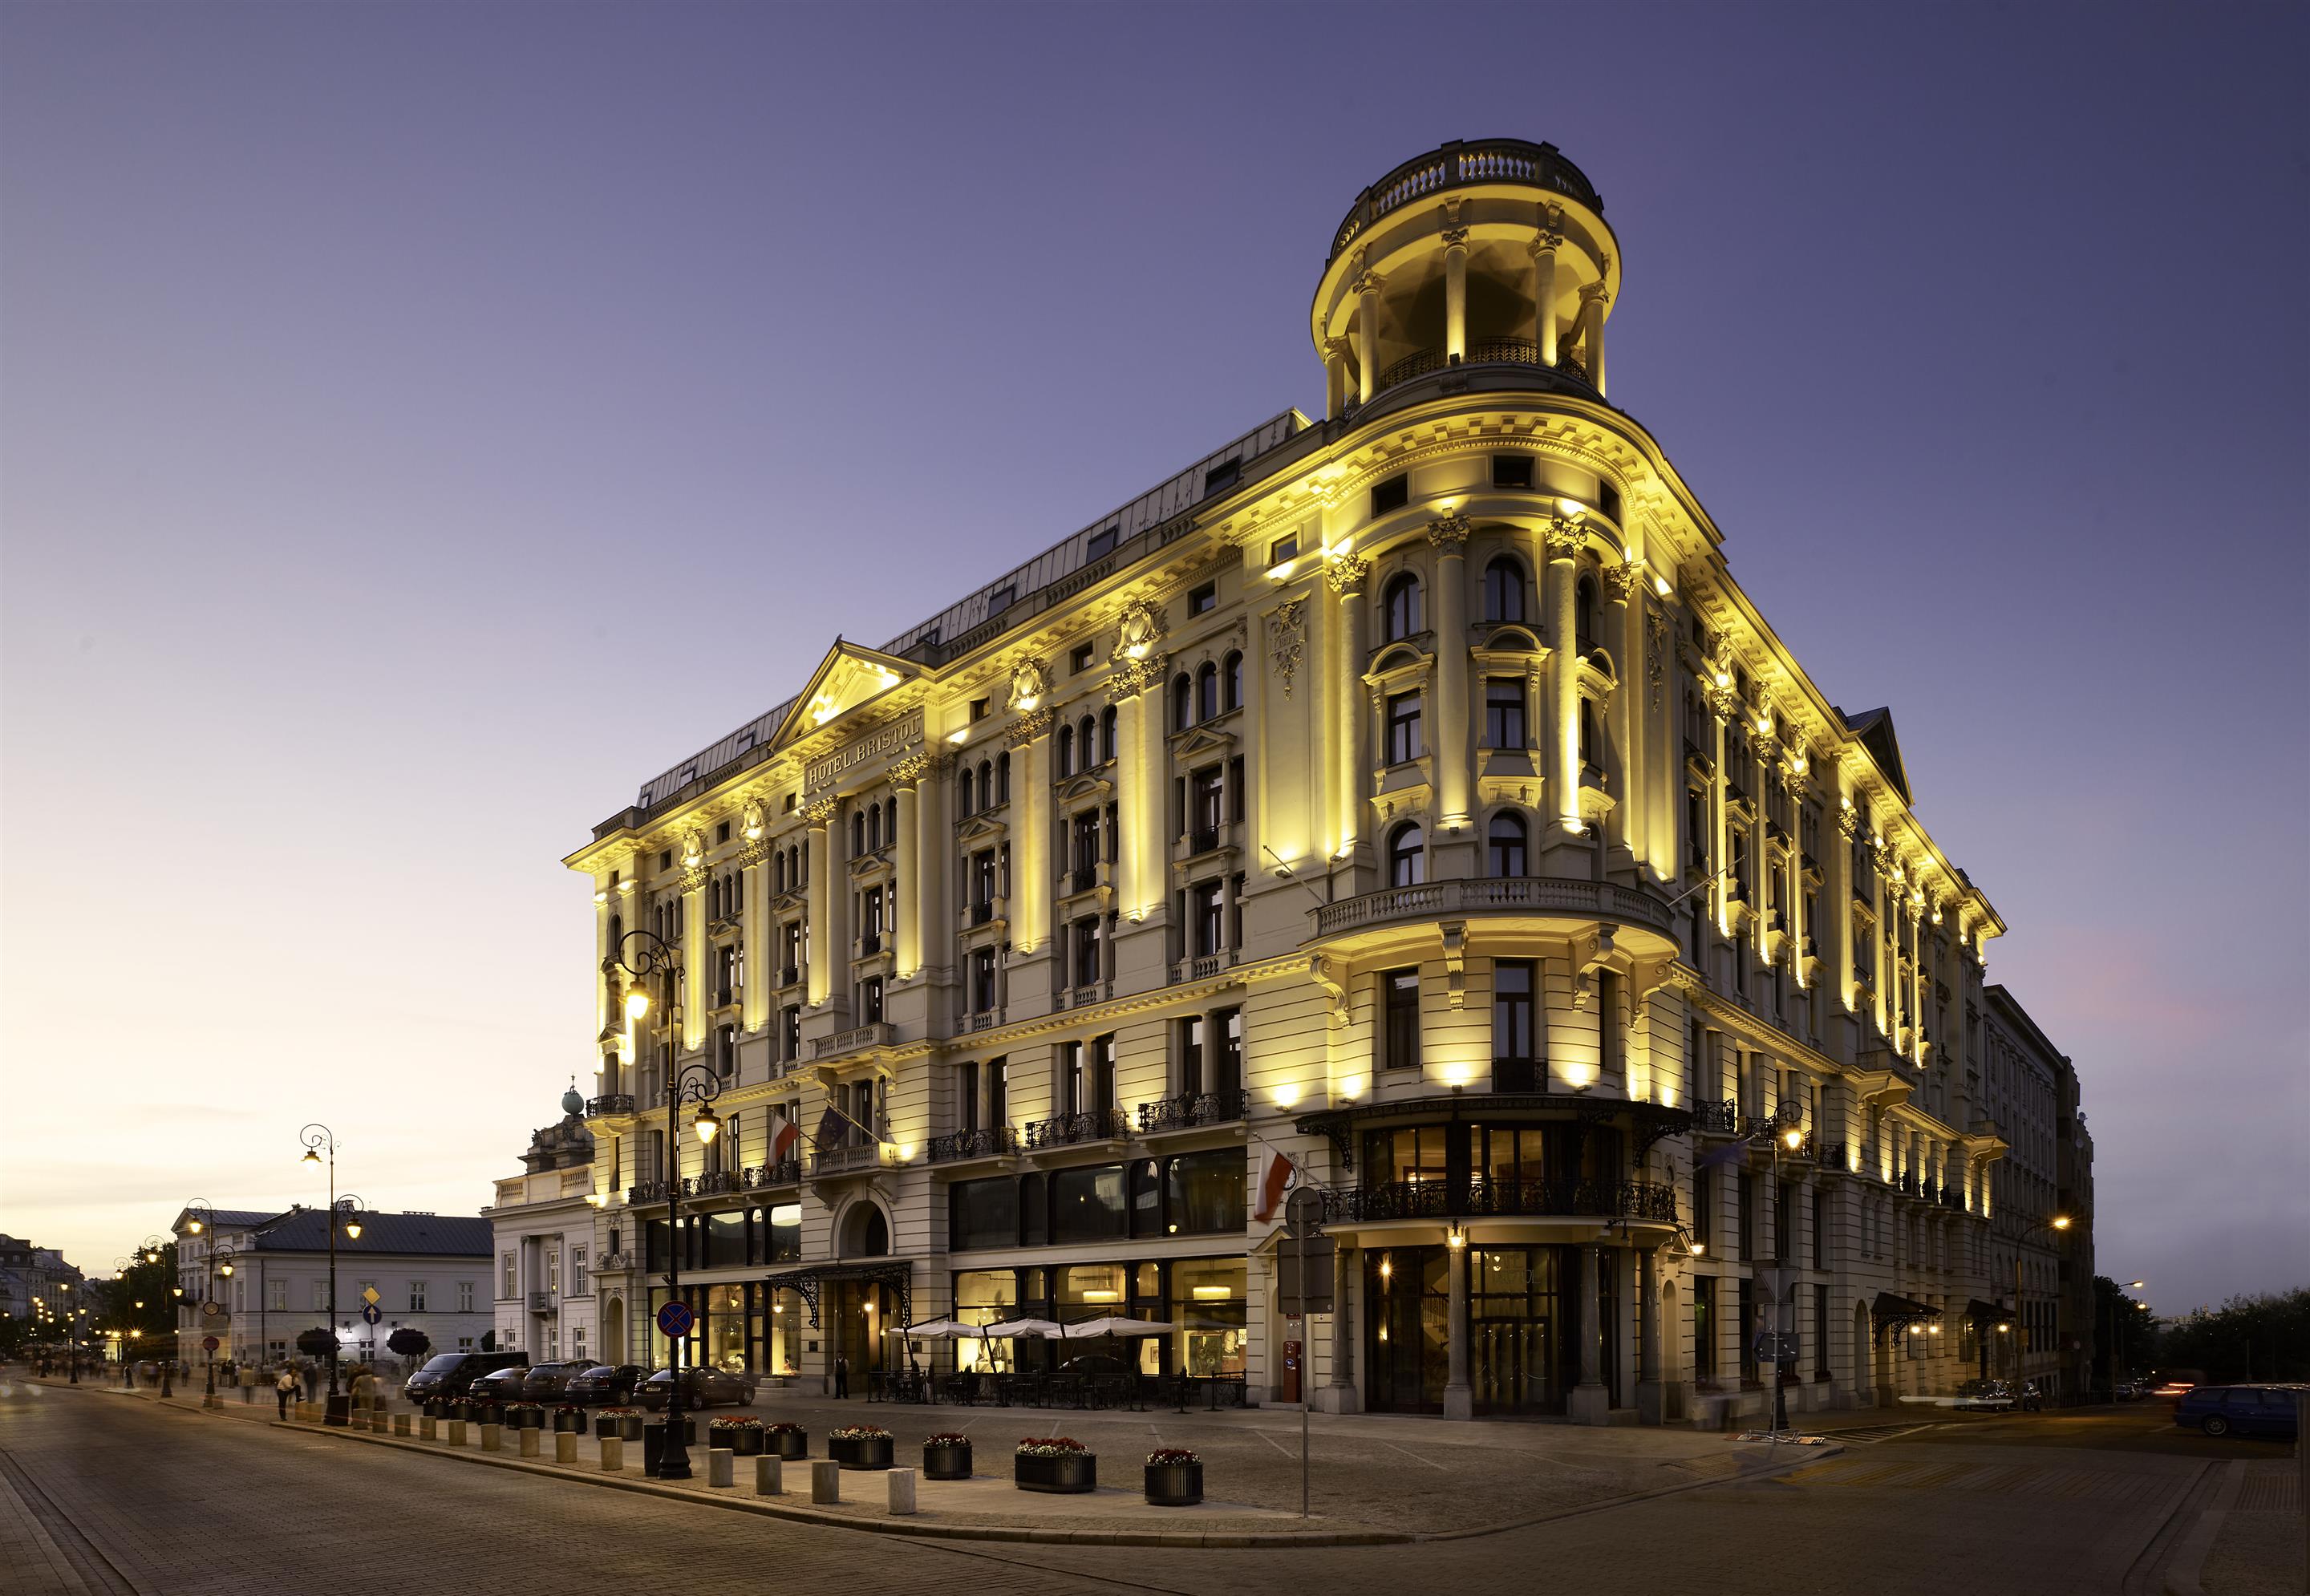 They their hotel. Отель Бристоль Варшава. Hotel Bristol, a Luxury collection Hotel, Warsaw. Отель Бристоль Польша. Отель Бристоль в Варшаве 19 век.